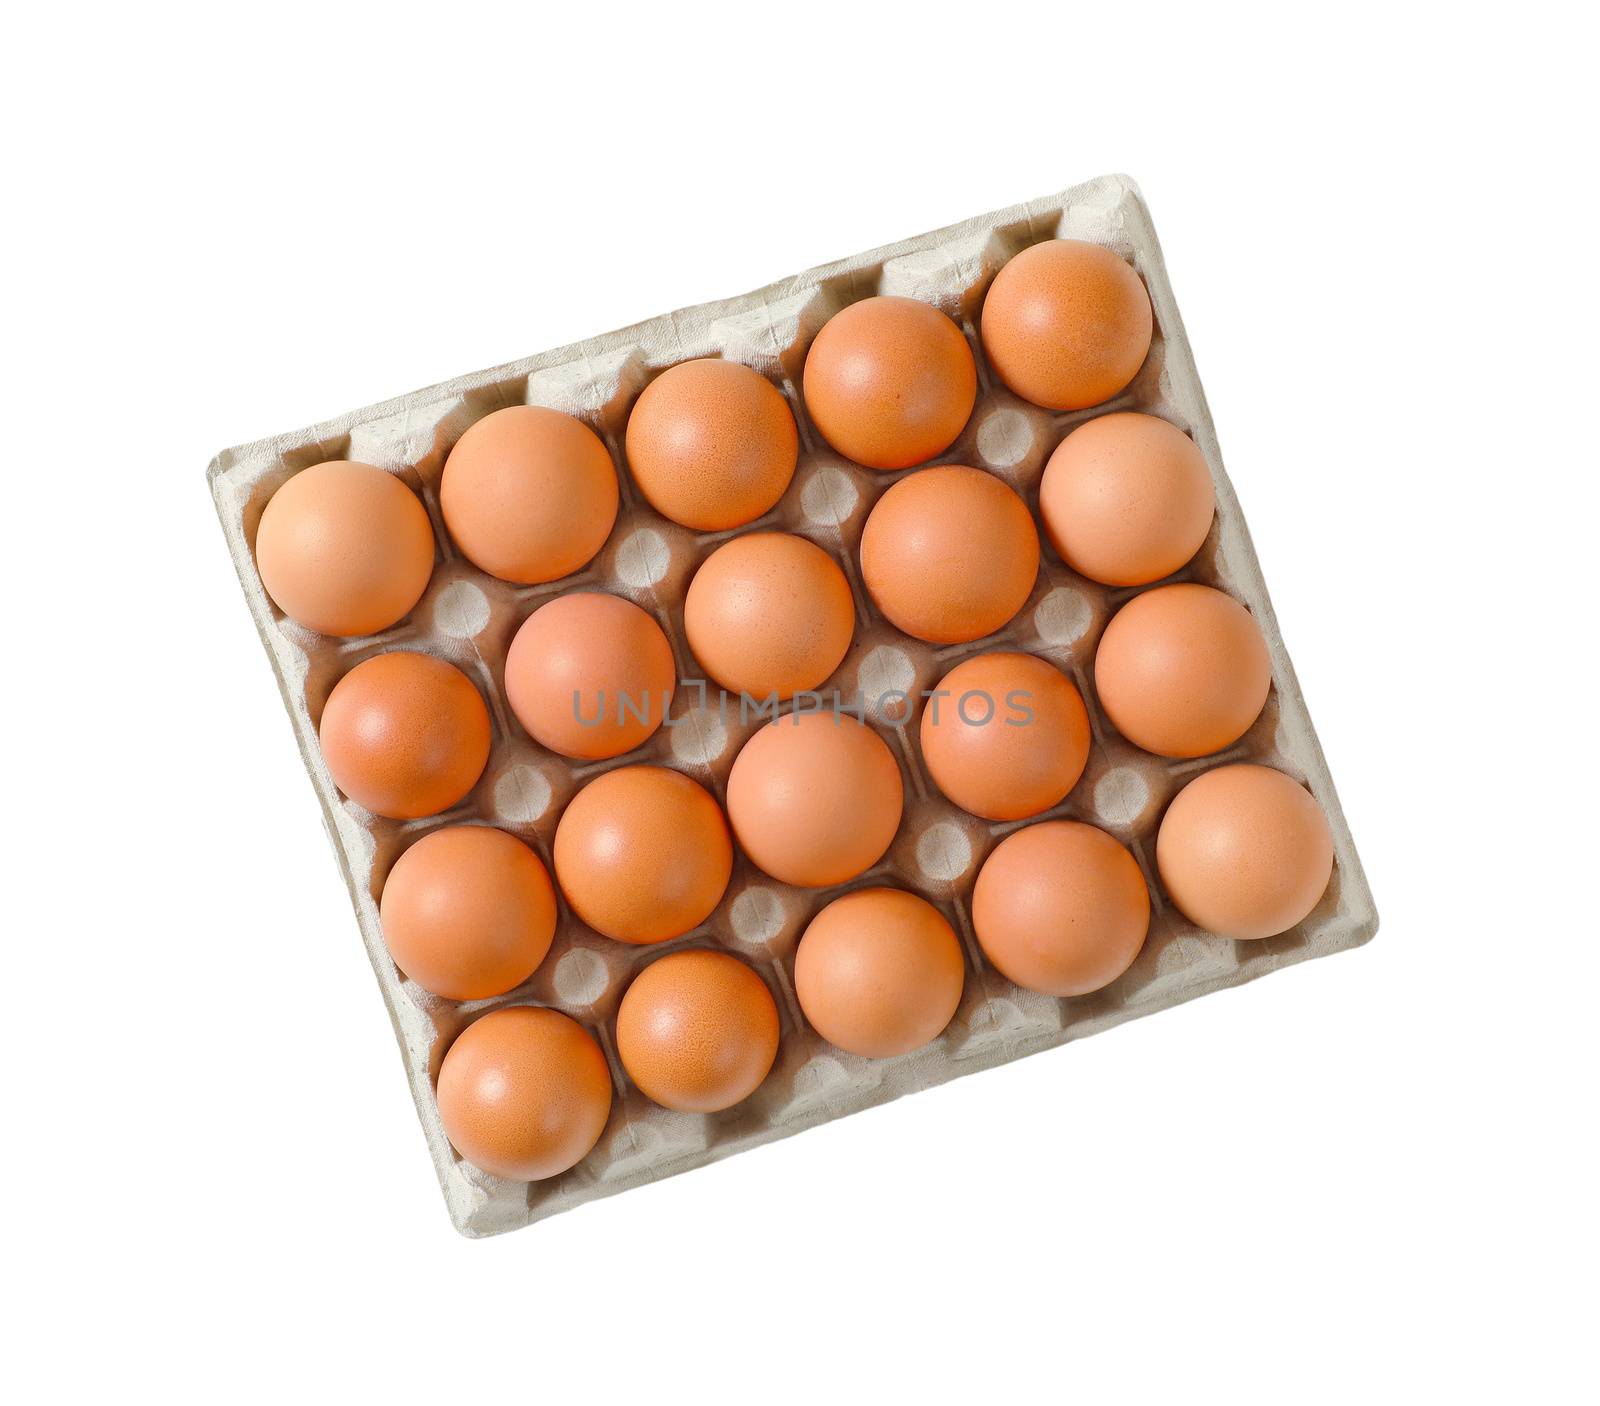 Carton of twenty fresh eggs by Digifoodstock